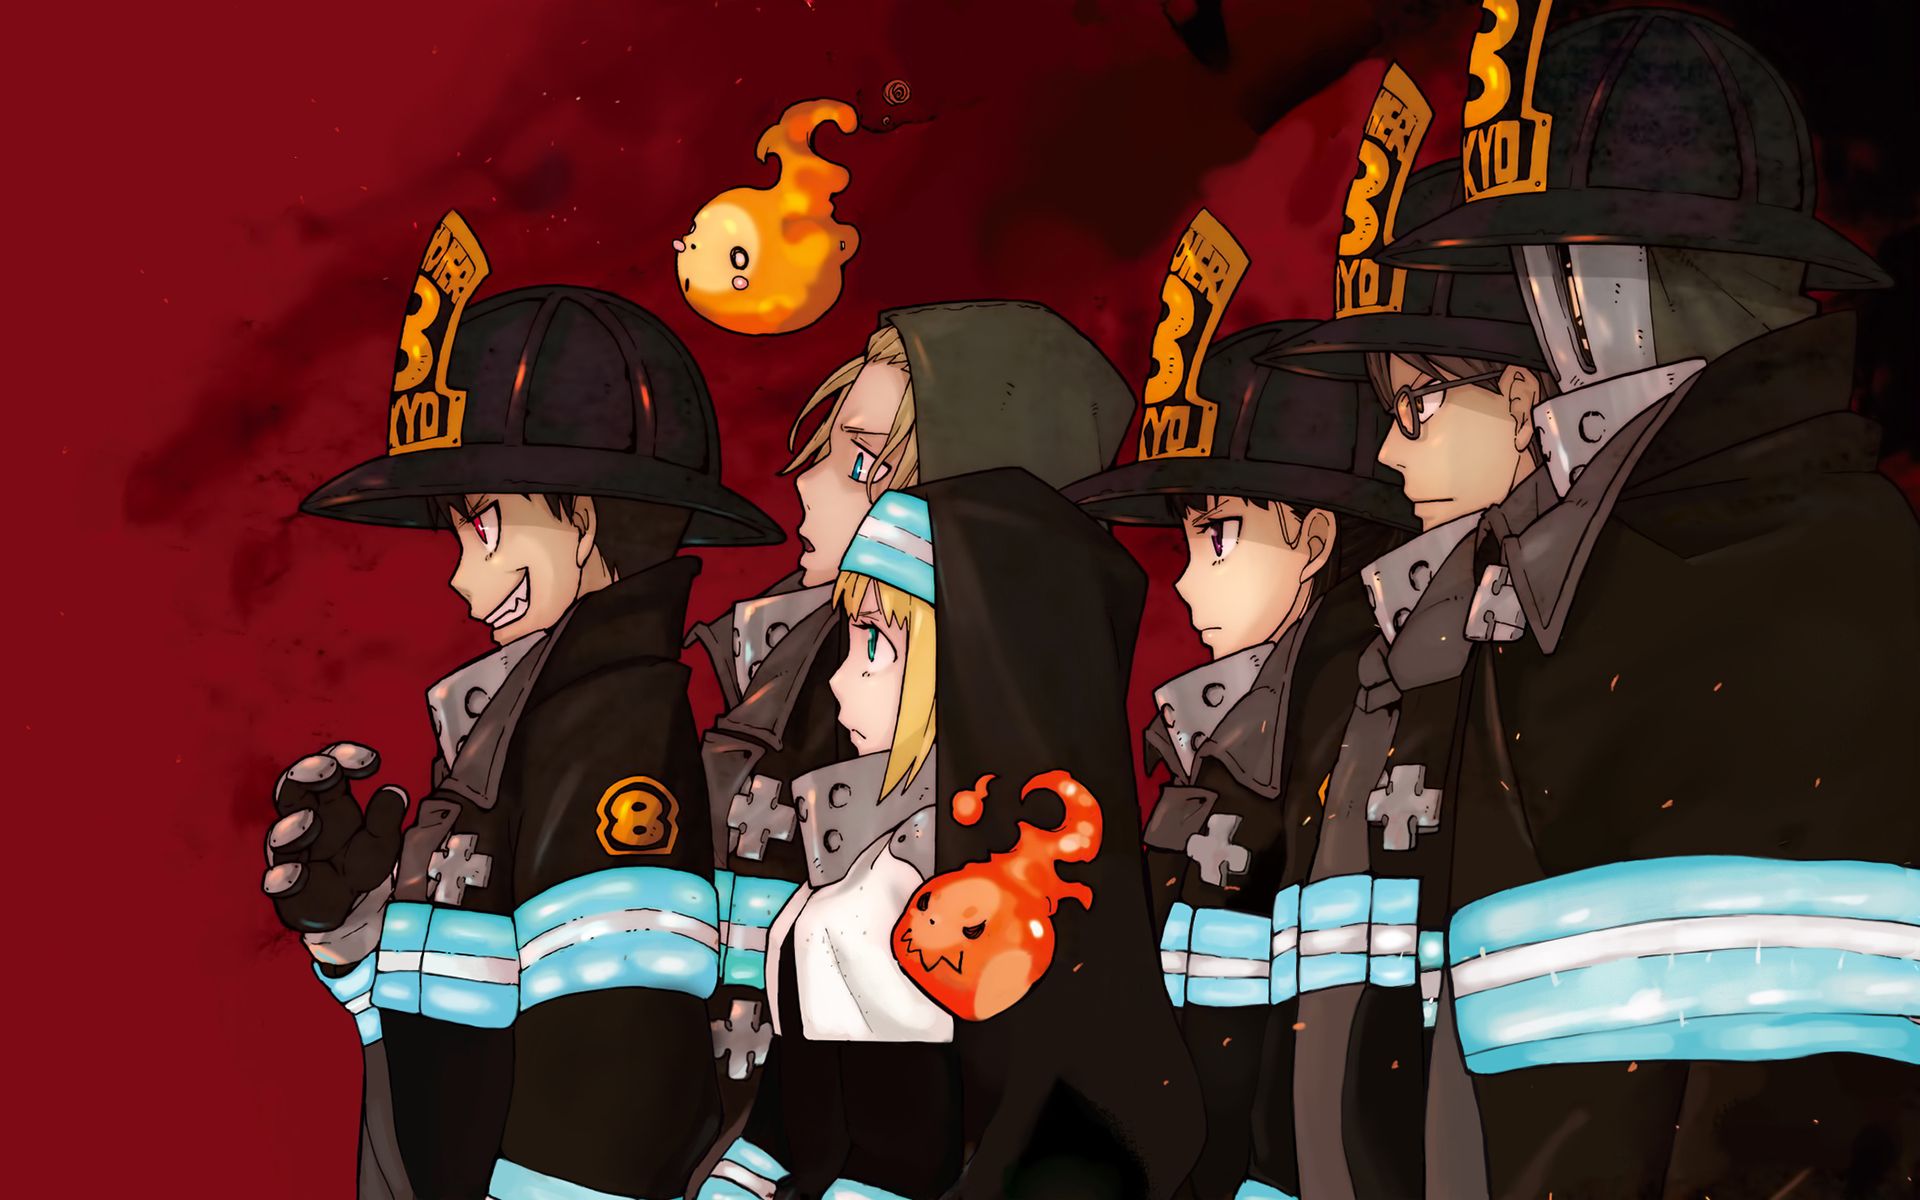 Fire Force Anime Mobile Wallpaper HD - Team Members